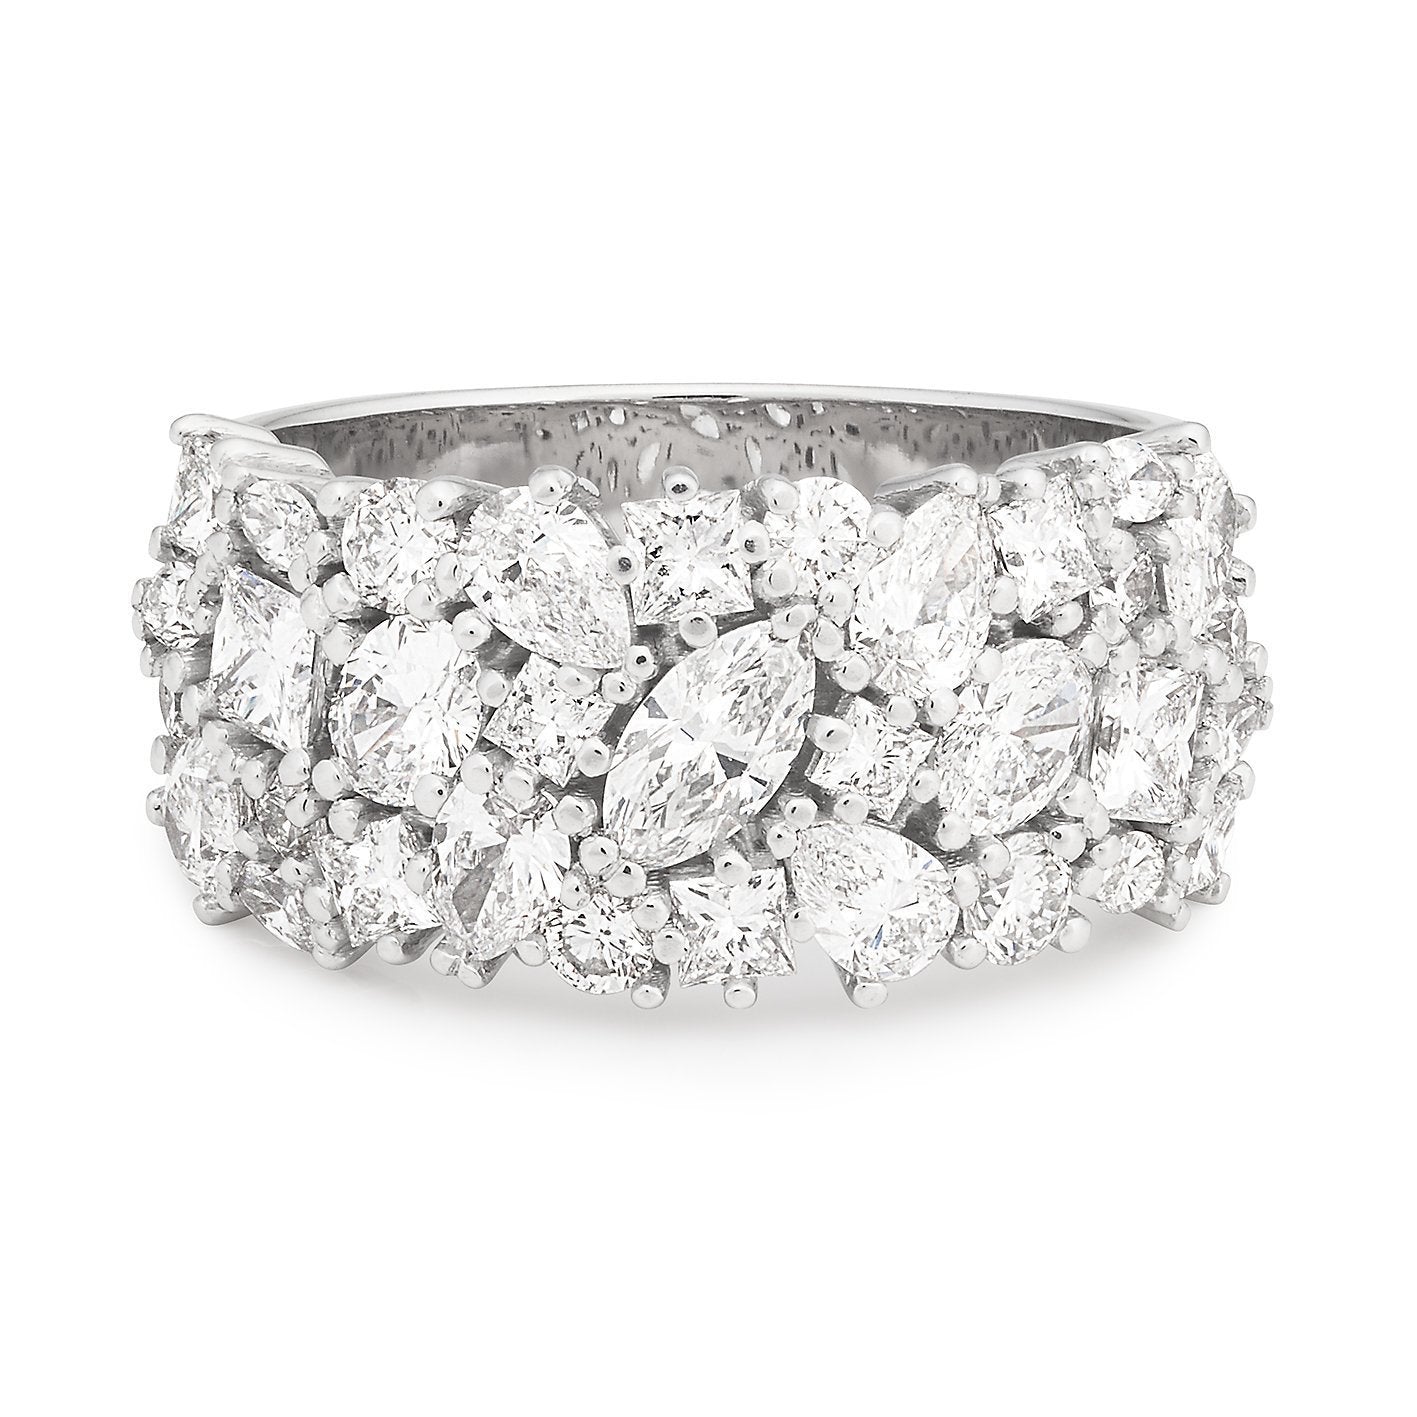 2.24ct Diamond Dress Ring in 18ct White Gold